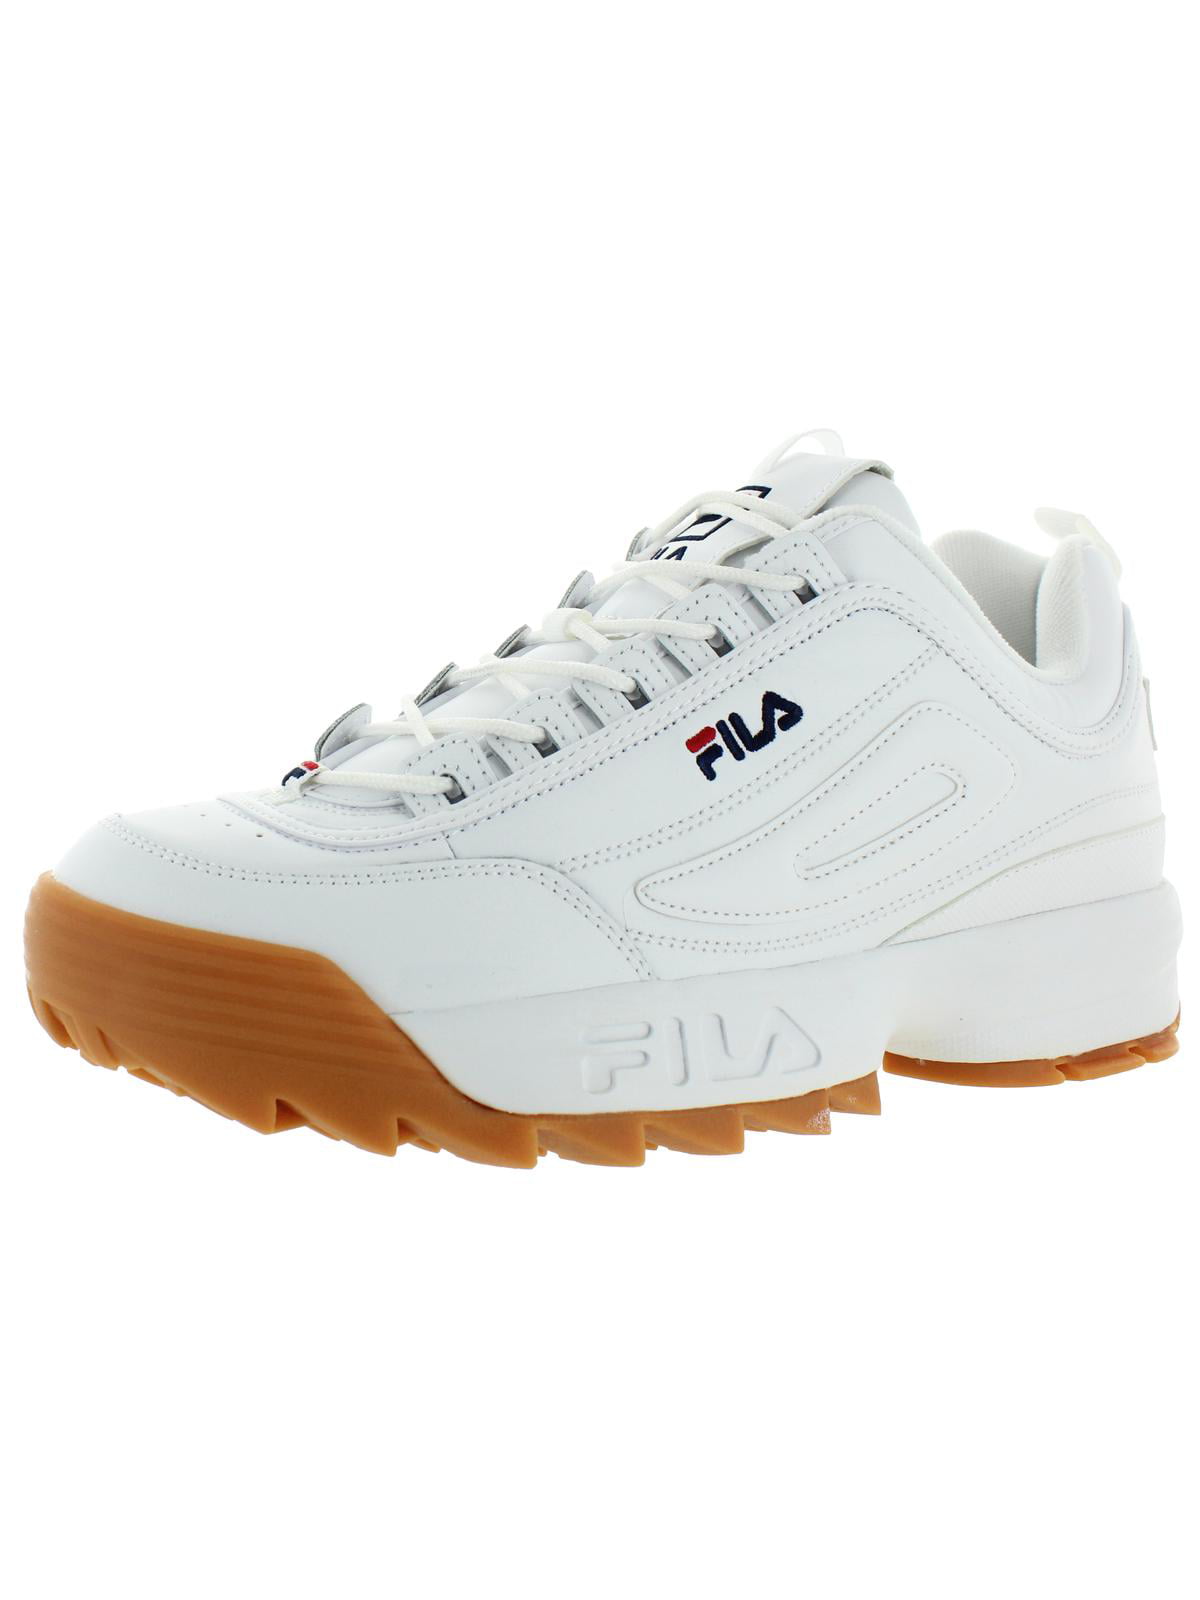 FILA Disruptor II 2 White Authentic Shoes Unisex Size US 4-11  FS1HTA1071X_WWT